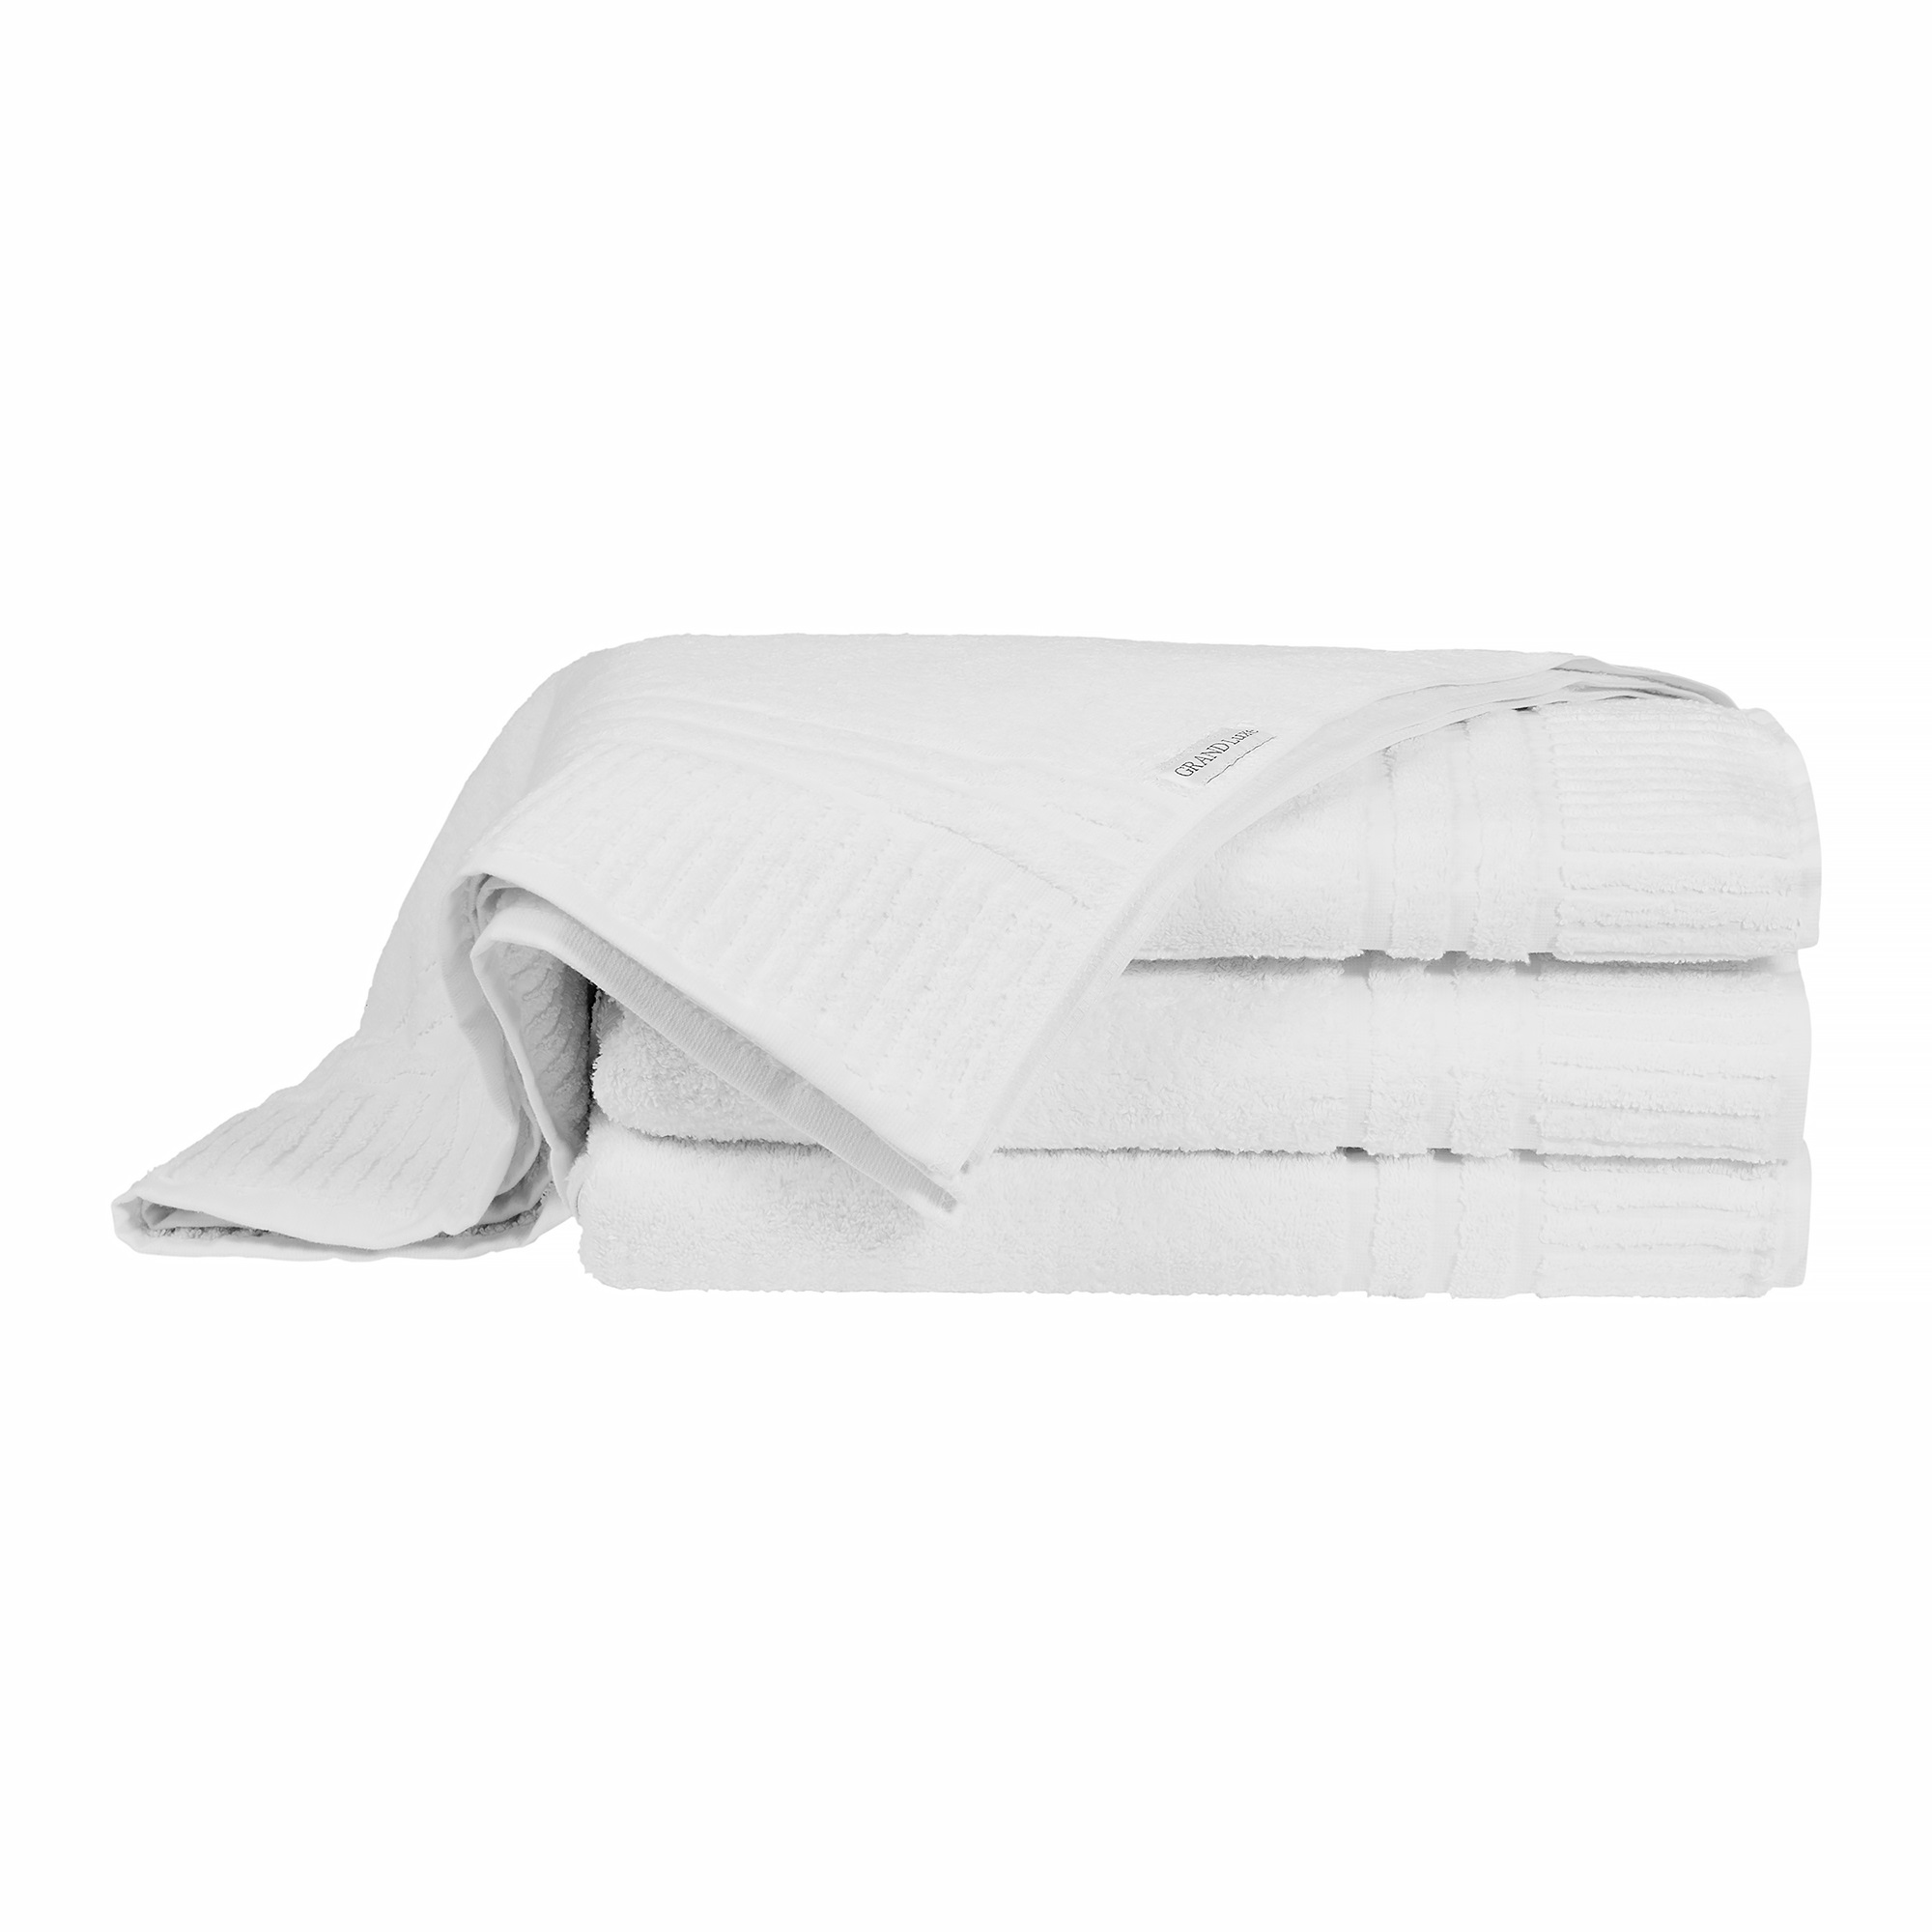 Towel Grand Luxe White 100x150 cm 500 g